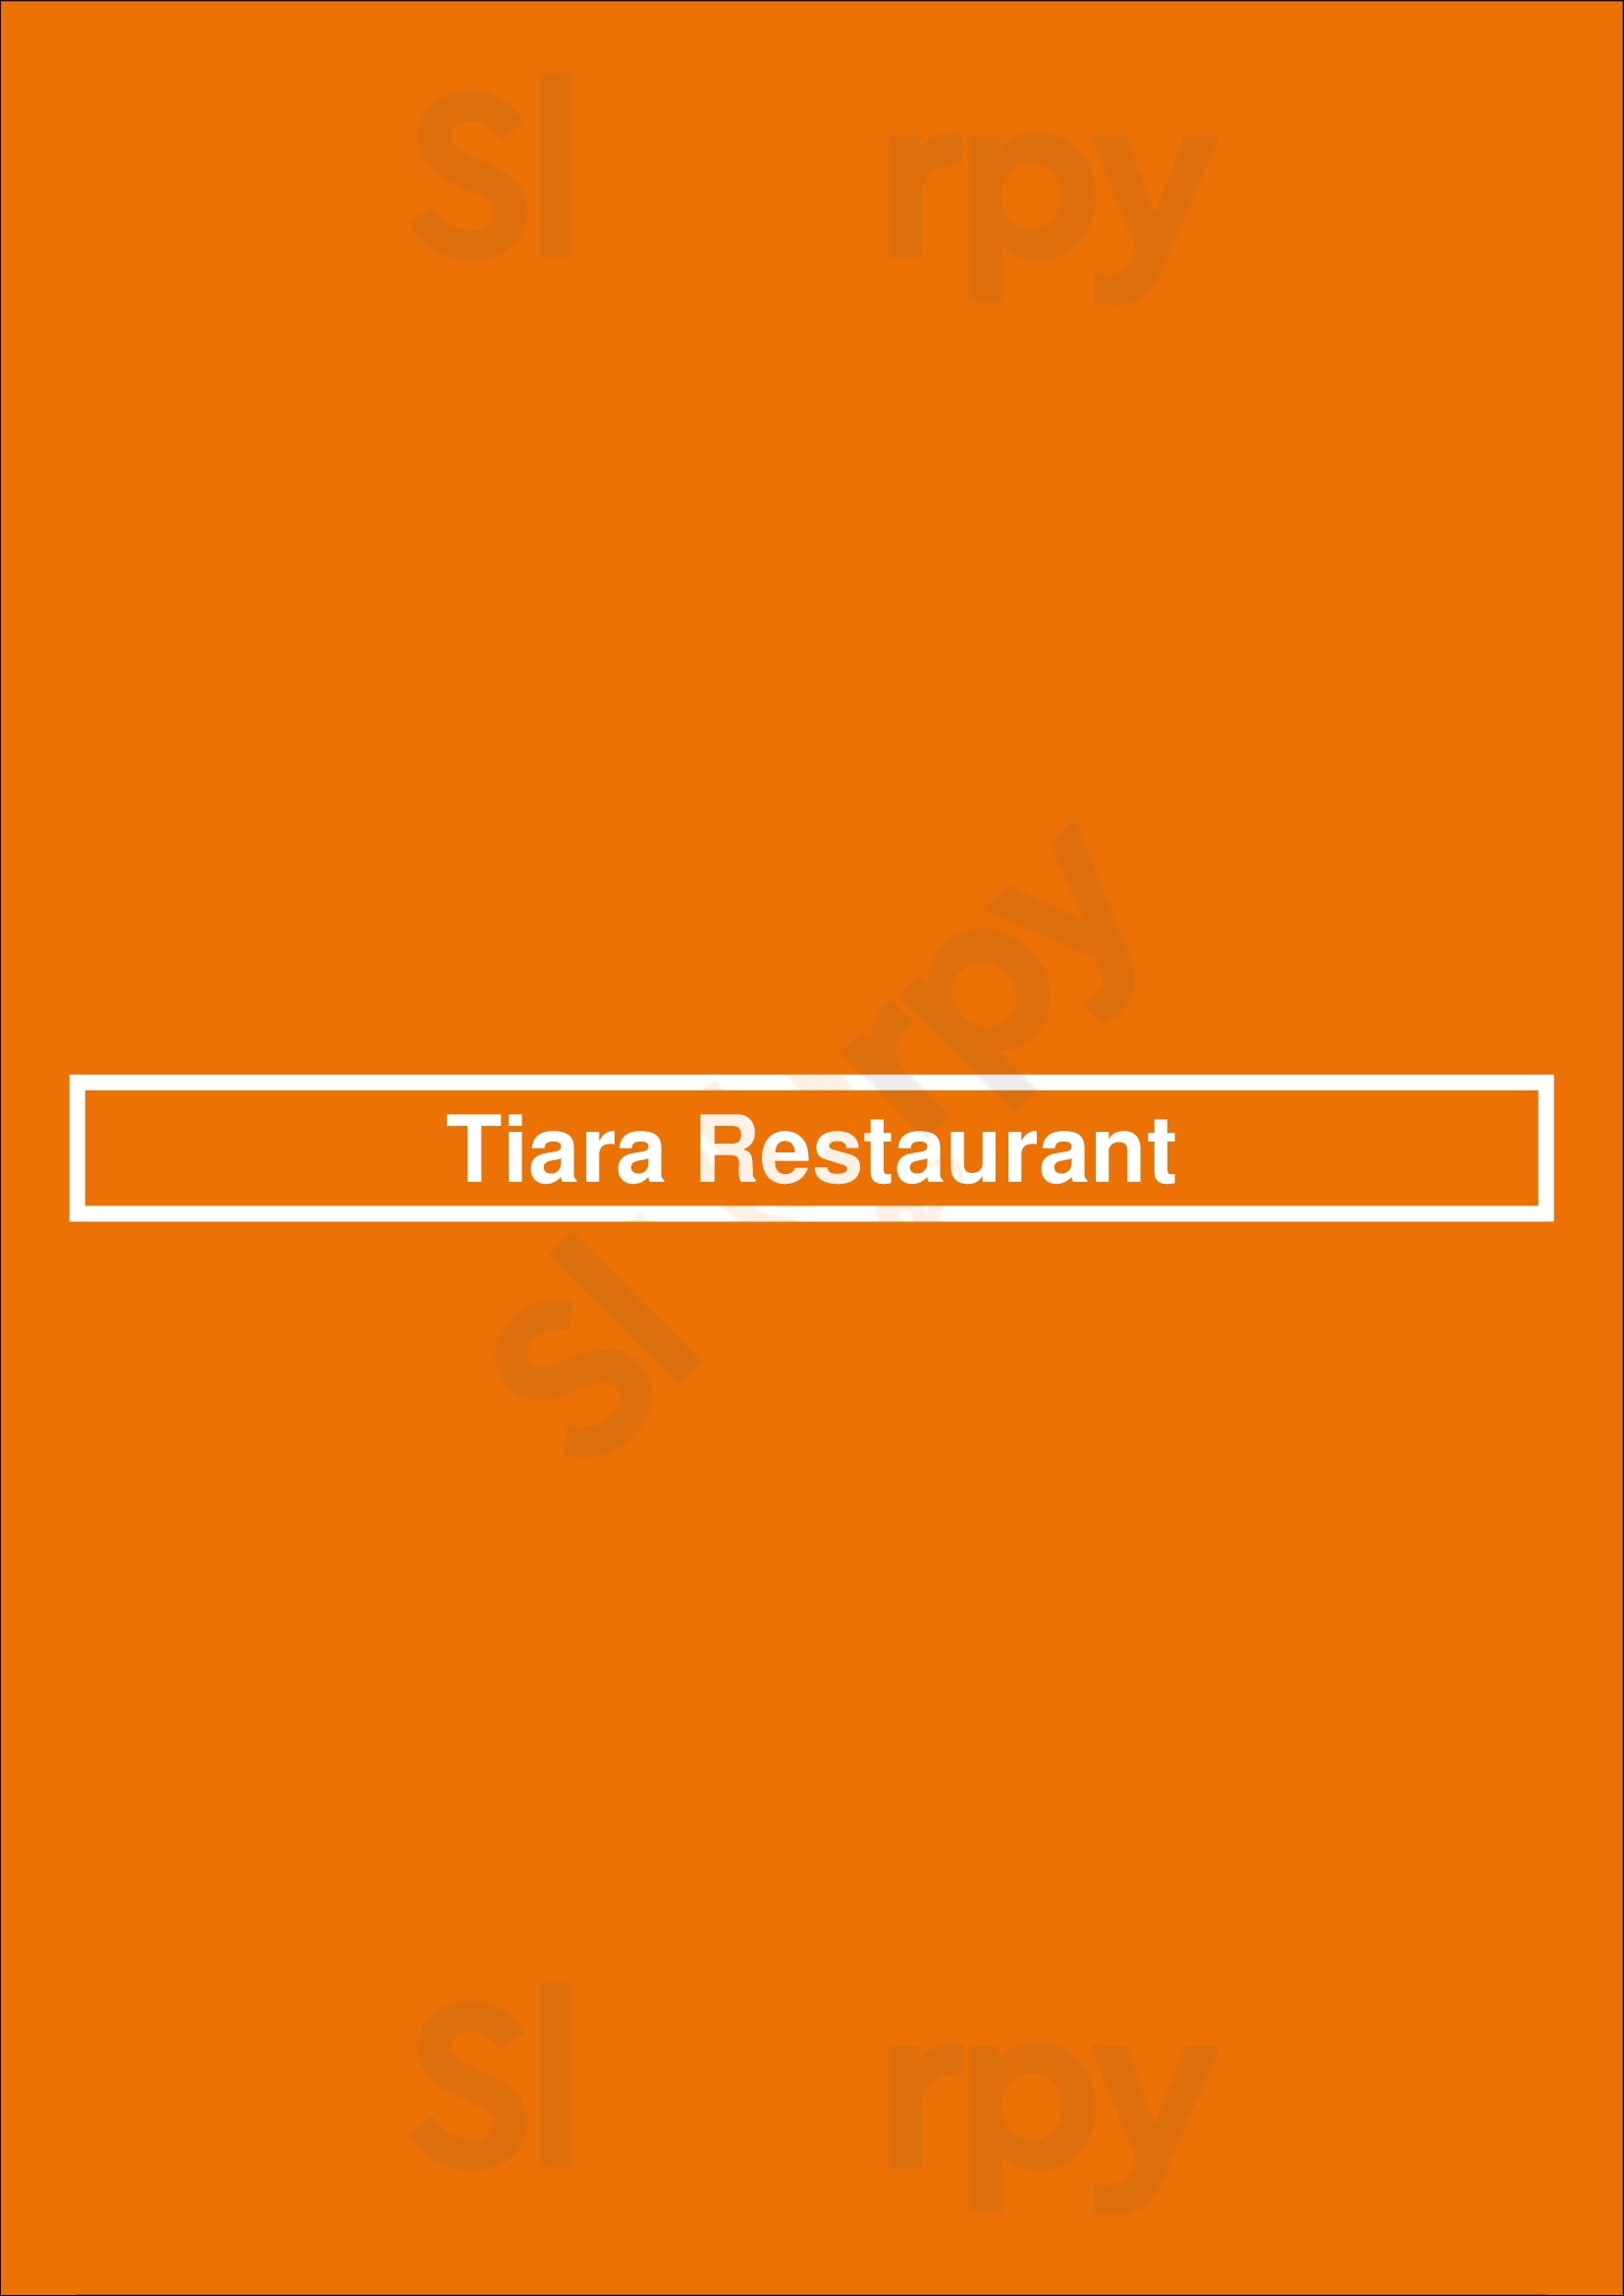 Tiara Restaurant Niagara-on-the-Lake Menu - 1